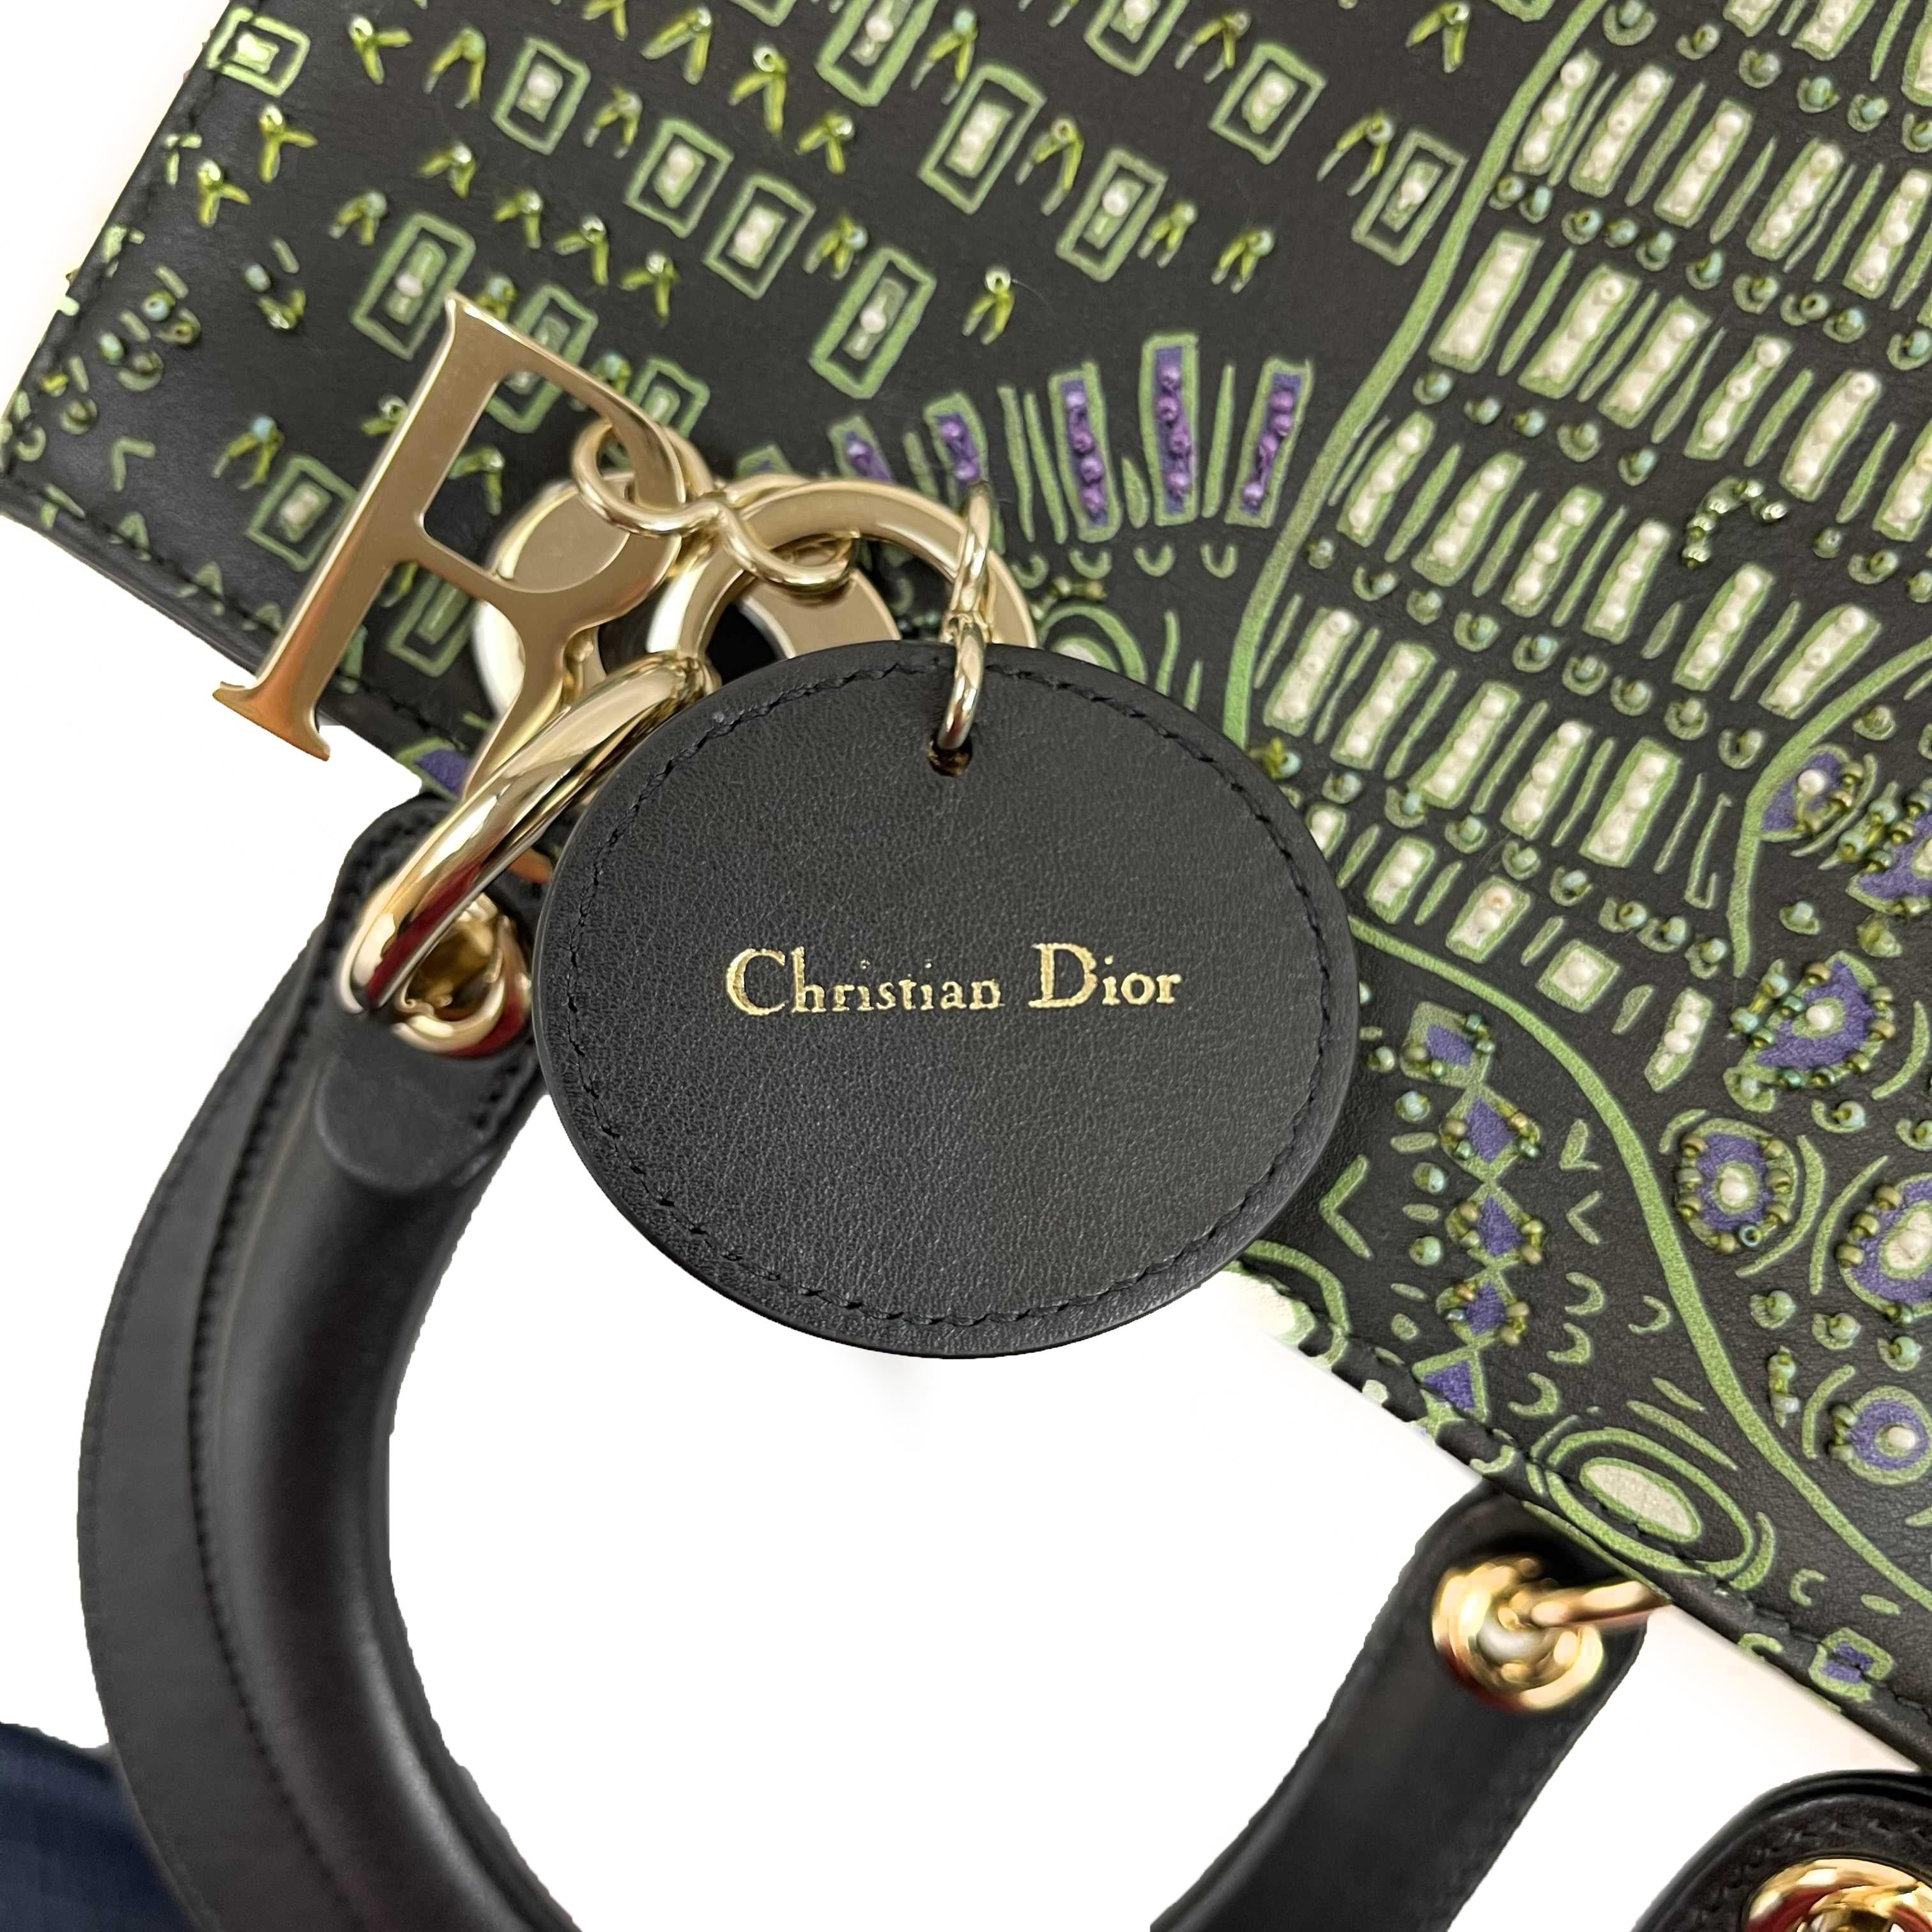 Christian Dior - Sac à main « Lady Dior » brodé d'animaux noirs et verts, taille moyenne 8